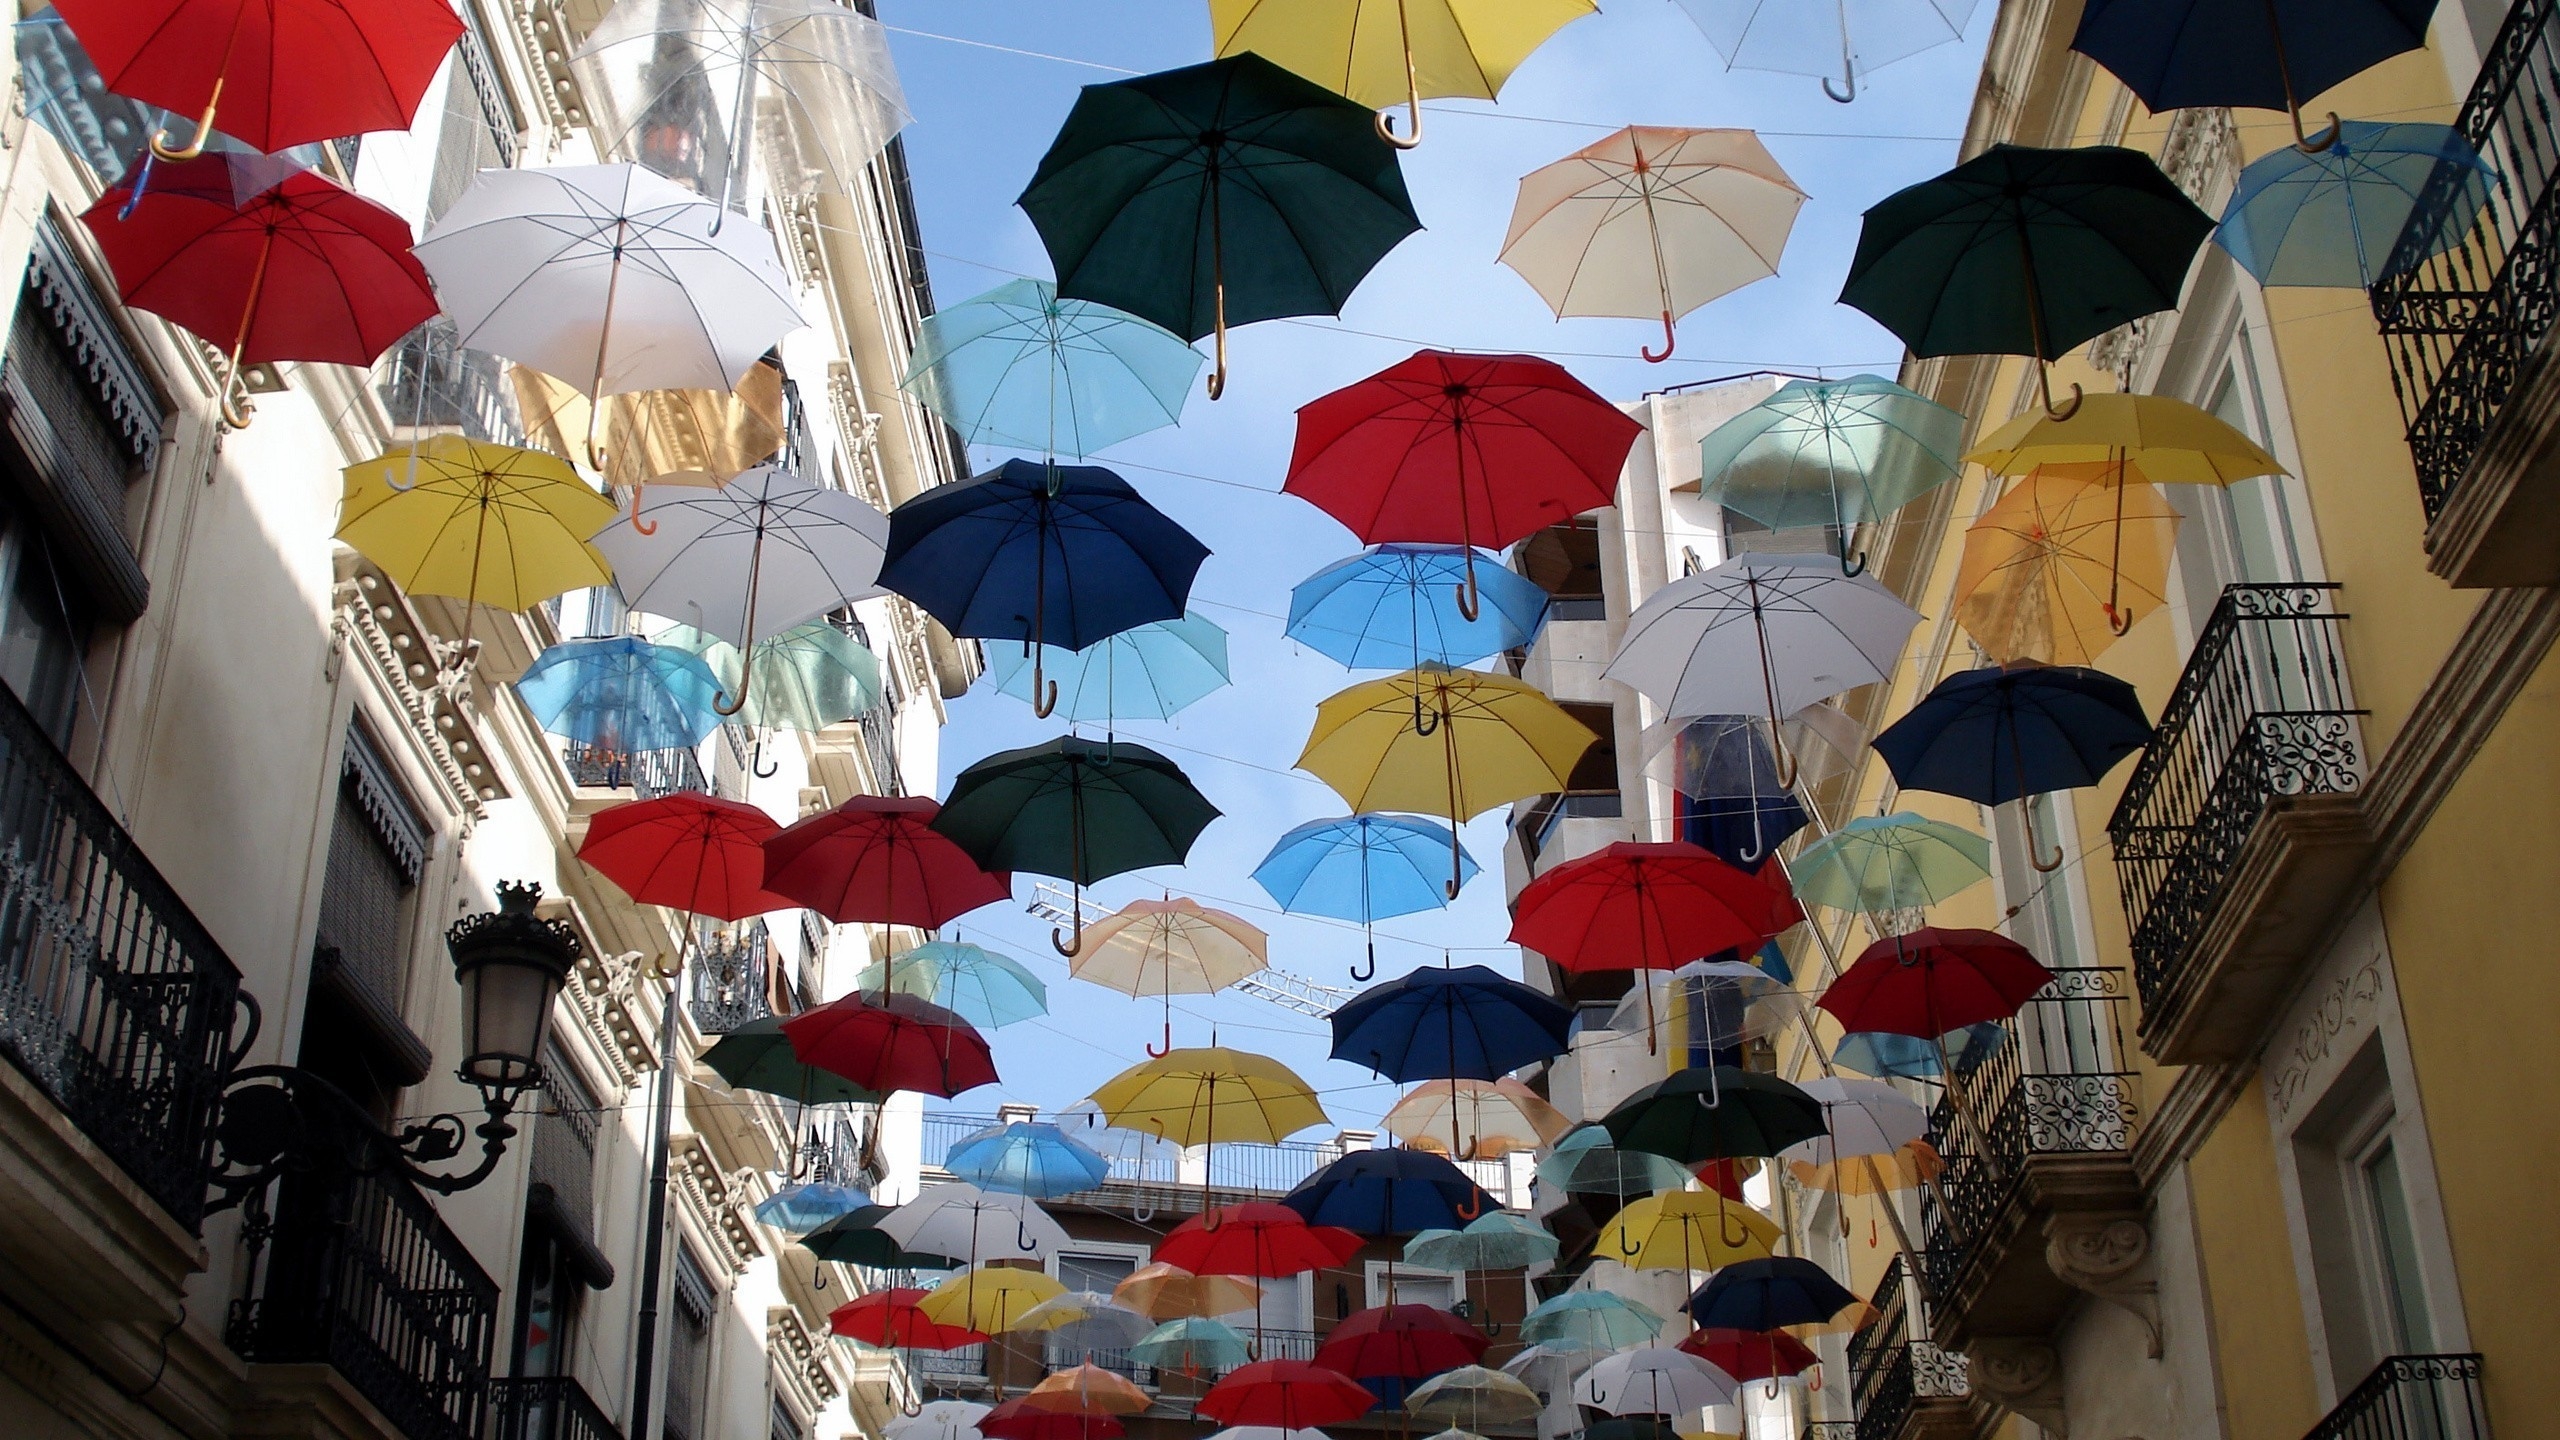 City of Umbrellas for 2560x1440 HDTV resolution